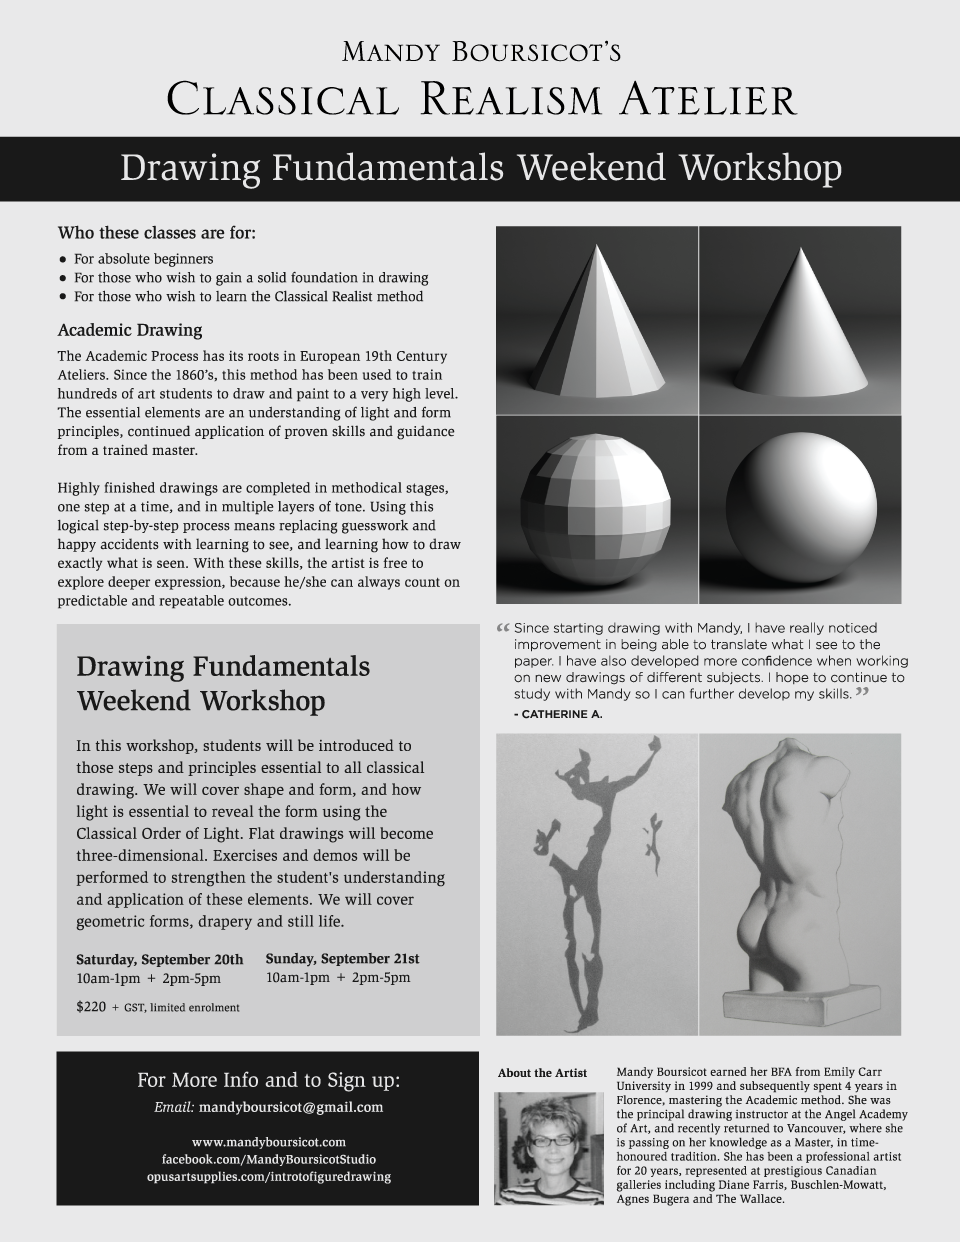 September 2014 Weekend Workshop:  Drawing Fundamentals